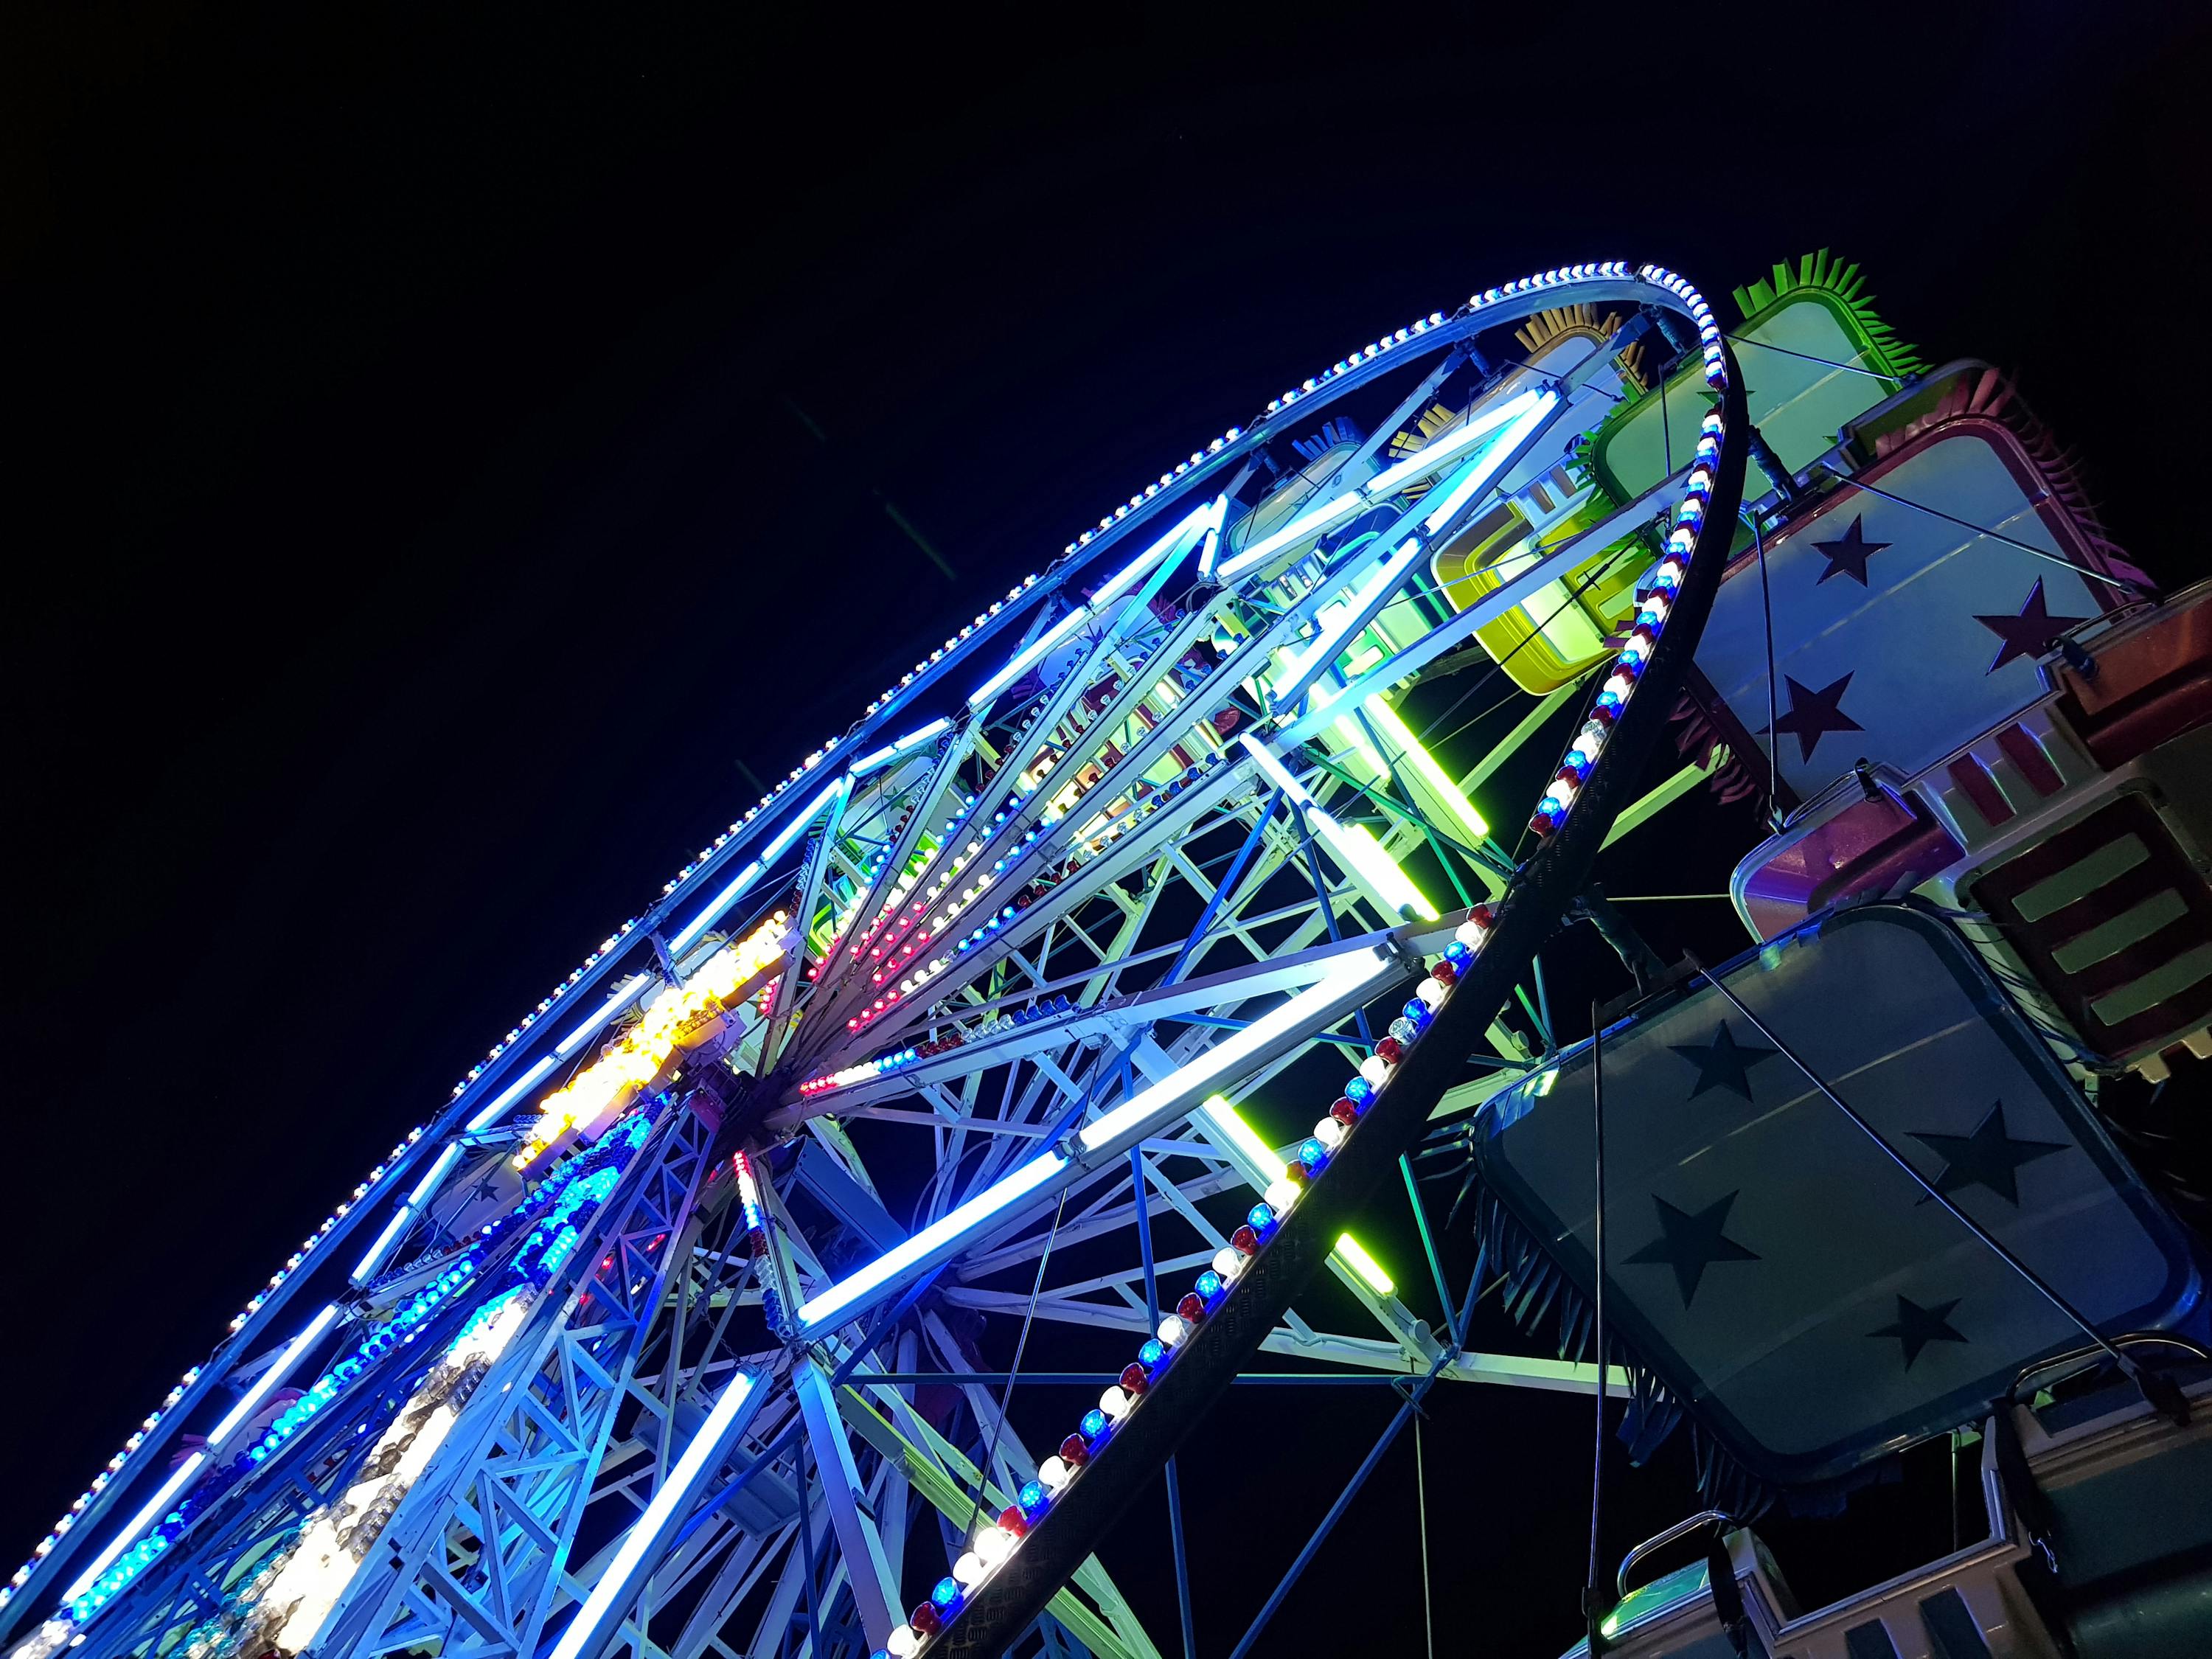 Ferris Wheel Under Black Sky during Nighttime · Free Stock Photo